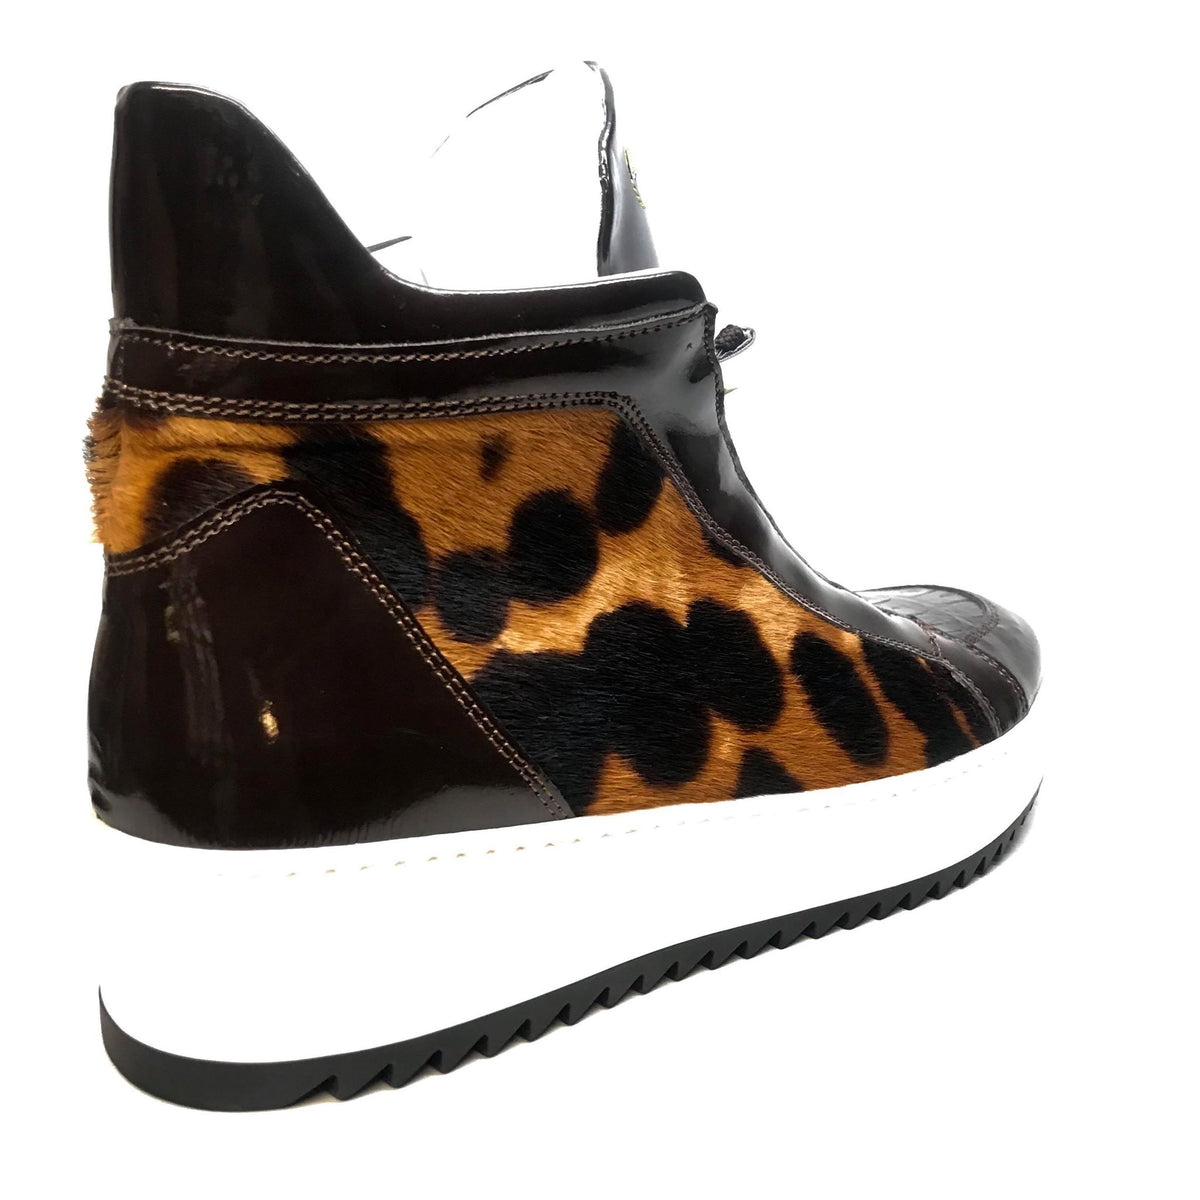 Mauri 6139 Pony Patent Crocodile Hightop Sneakers - Dudes Boutique